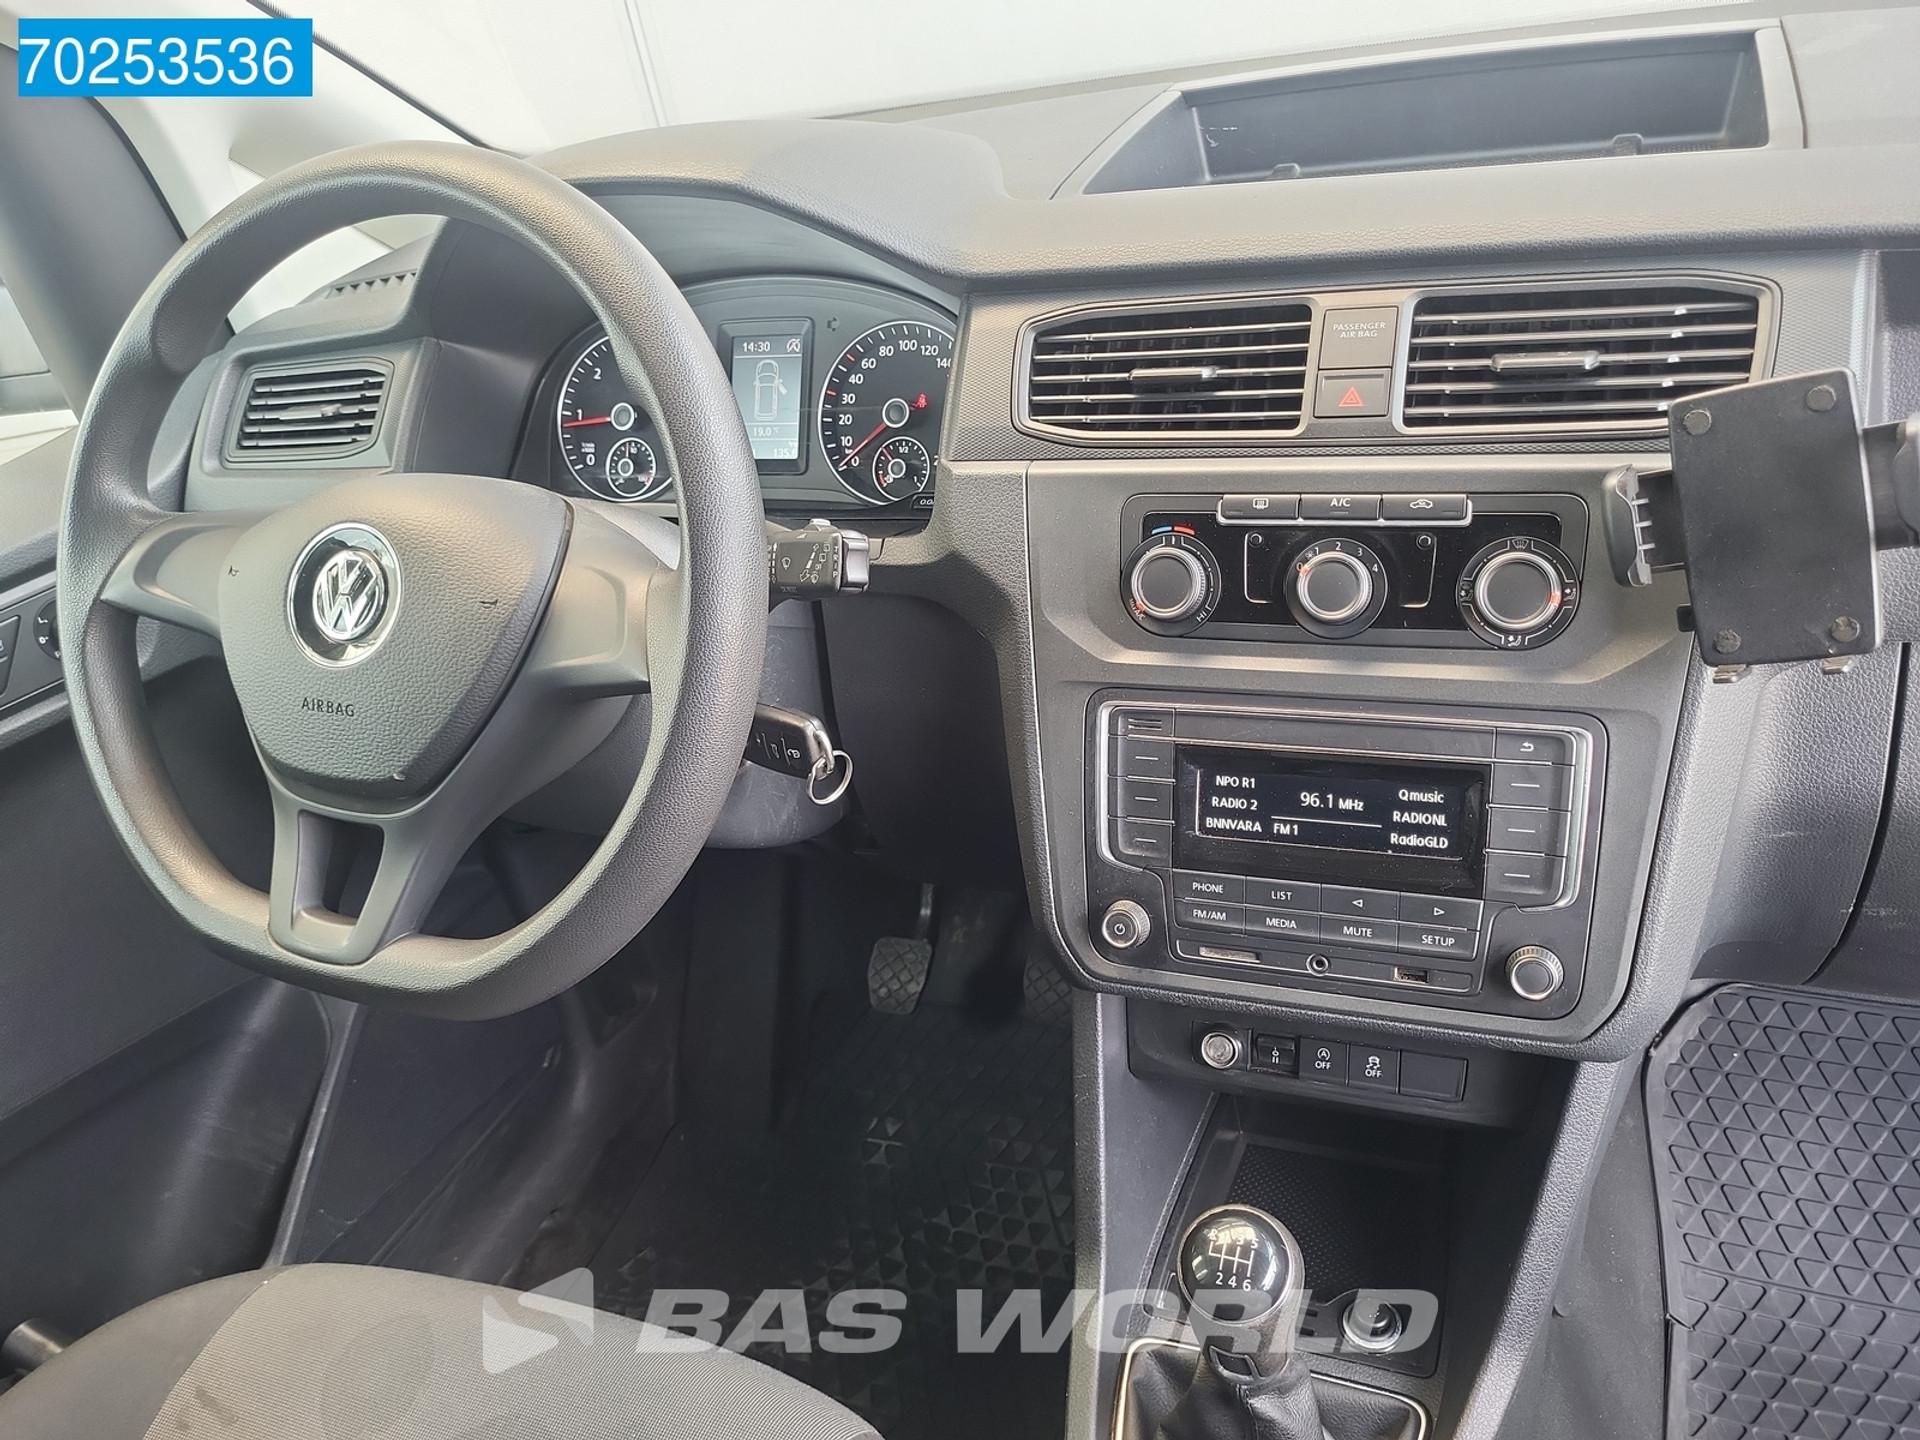 Foto 9 van Volkswagen Euro6 4x4 Airco Cruise Parkeersensoren 4Motion 4WD 4 Motion 3m3 Airco Trekhaak Cruise control